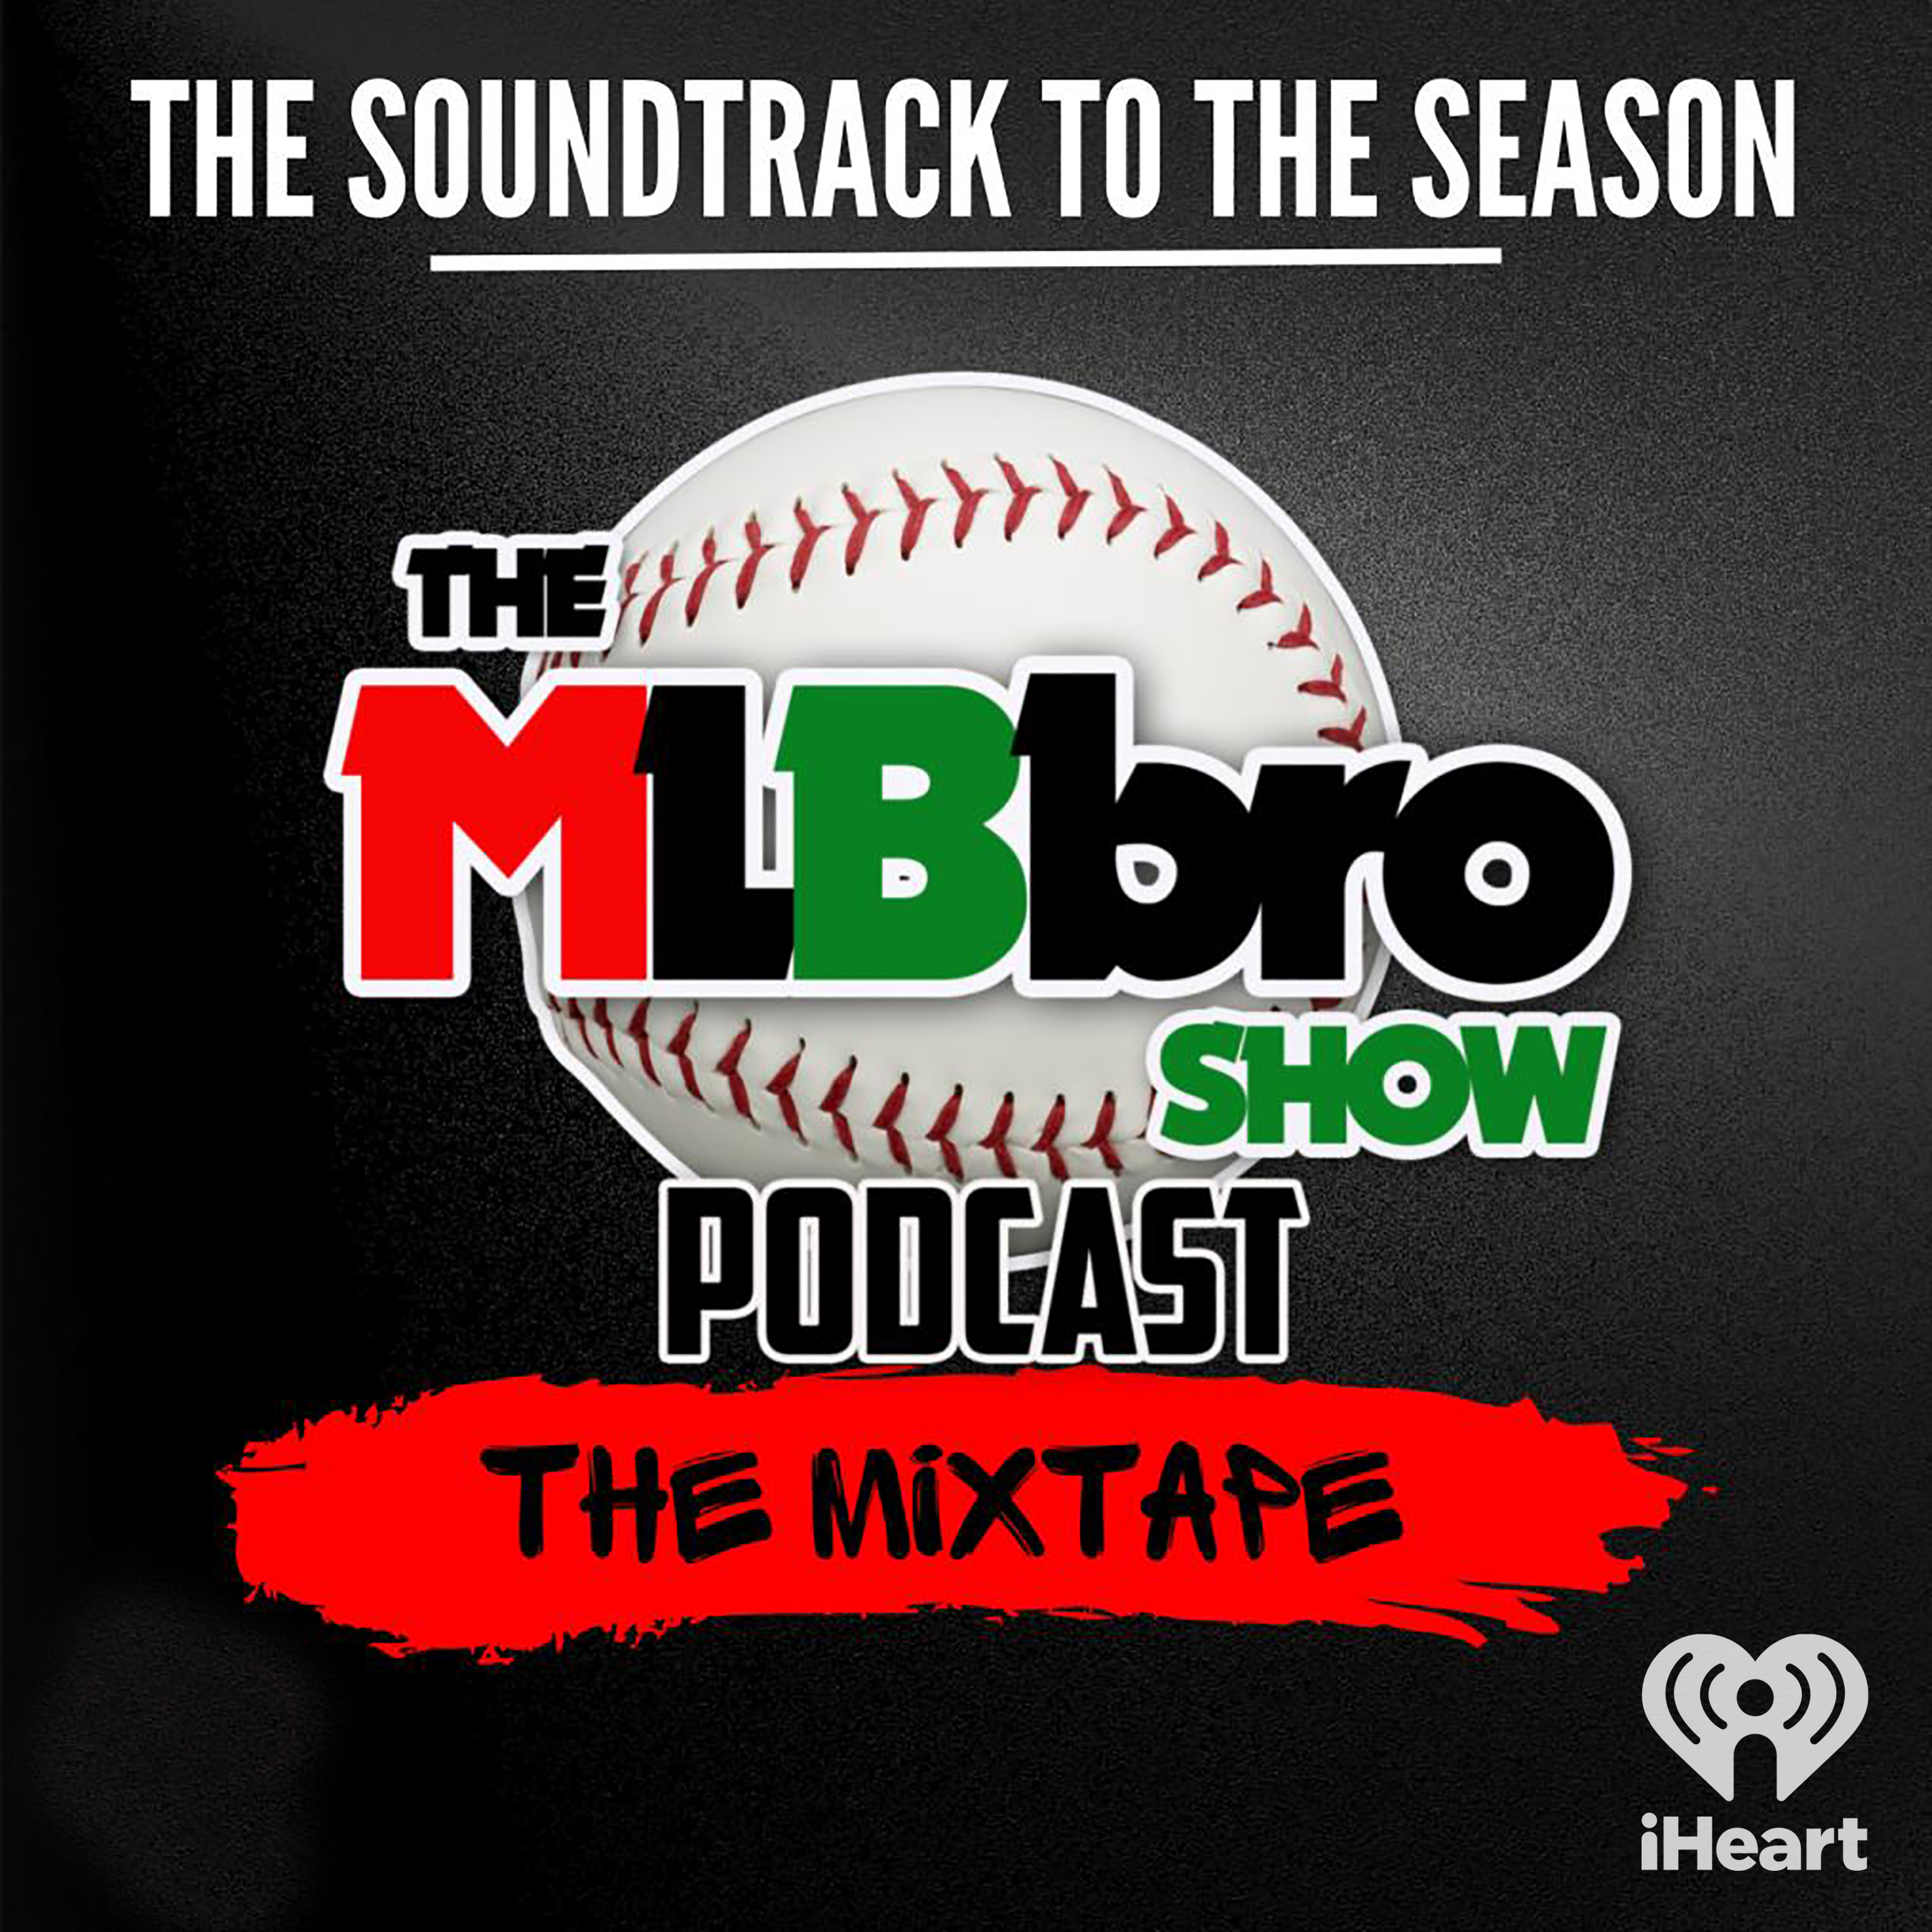 MLBbro Show Podcast The Mixtape Vol 3 Episode 22